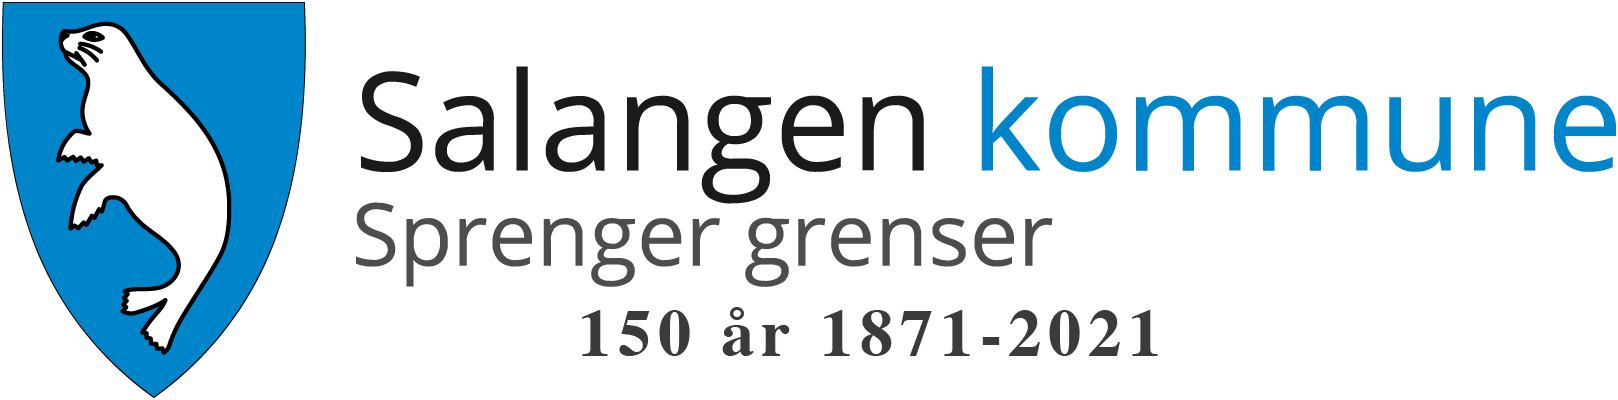 SALANGEN KOMMUNE logo